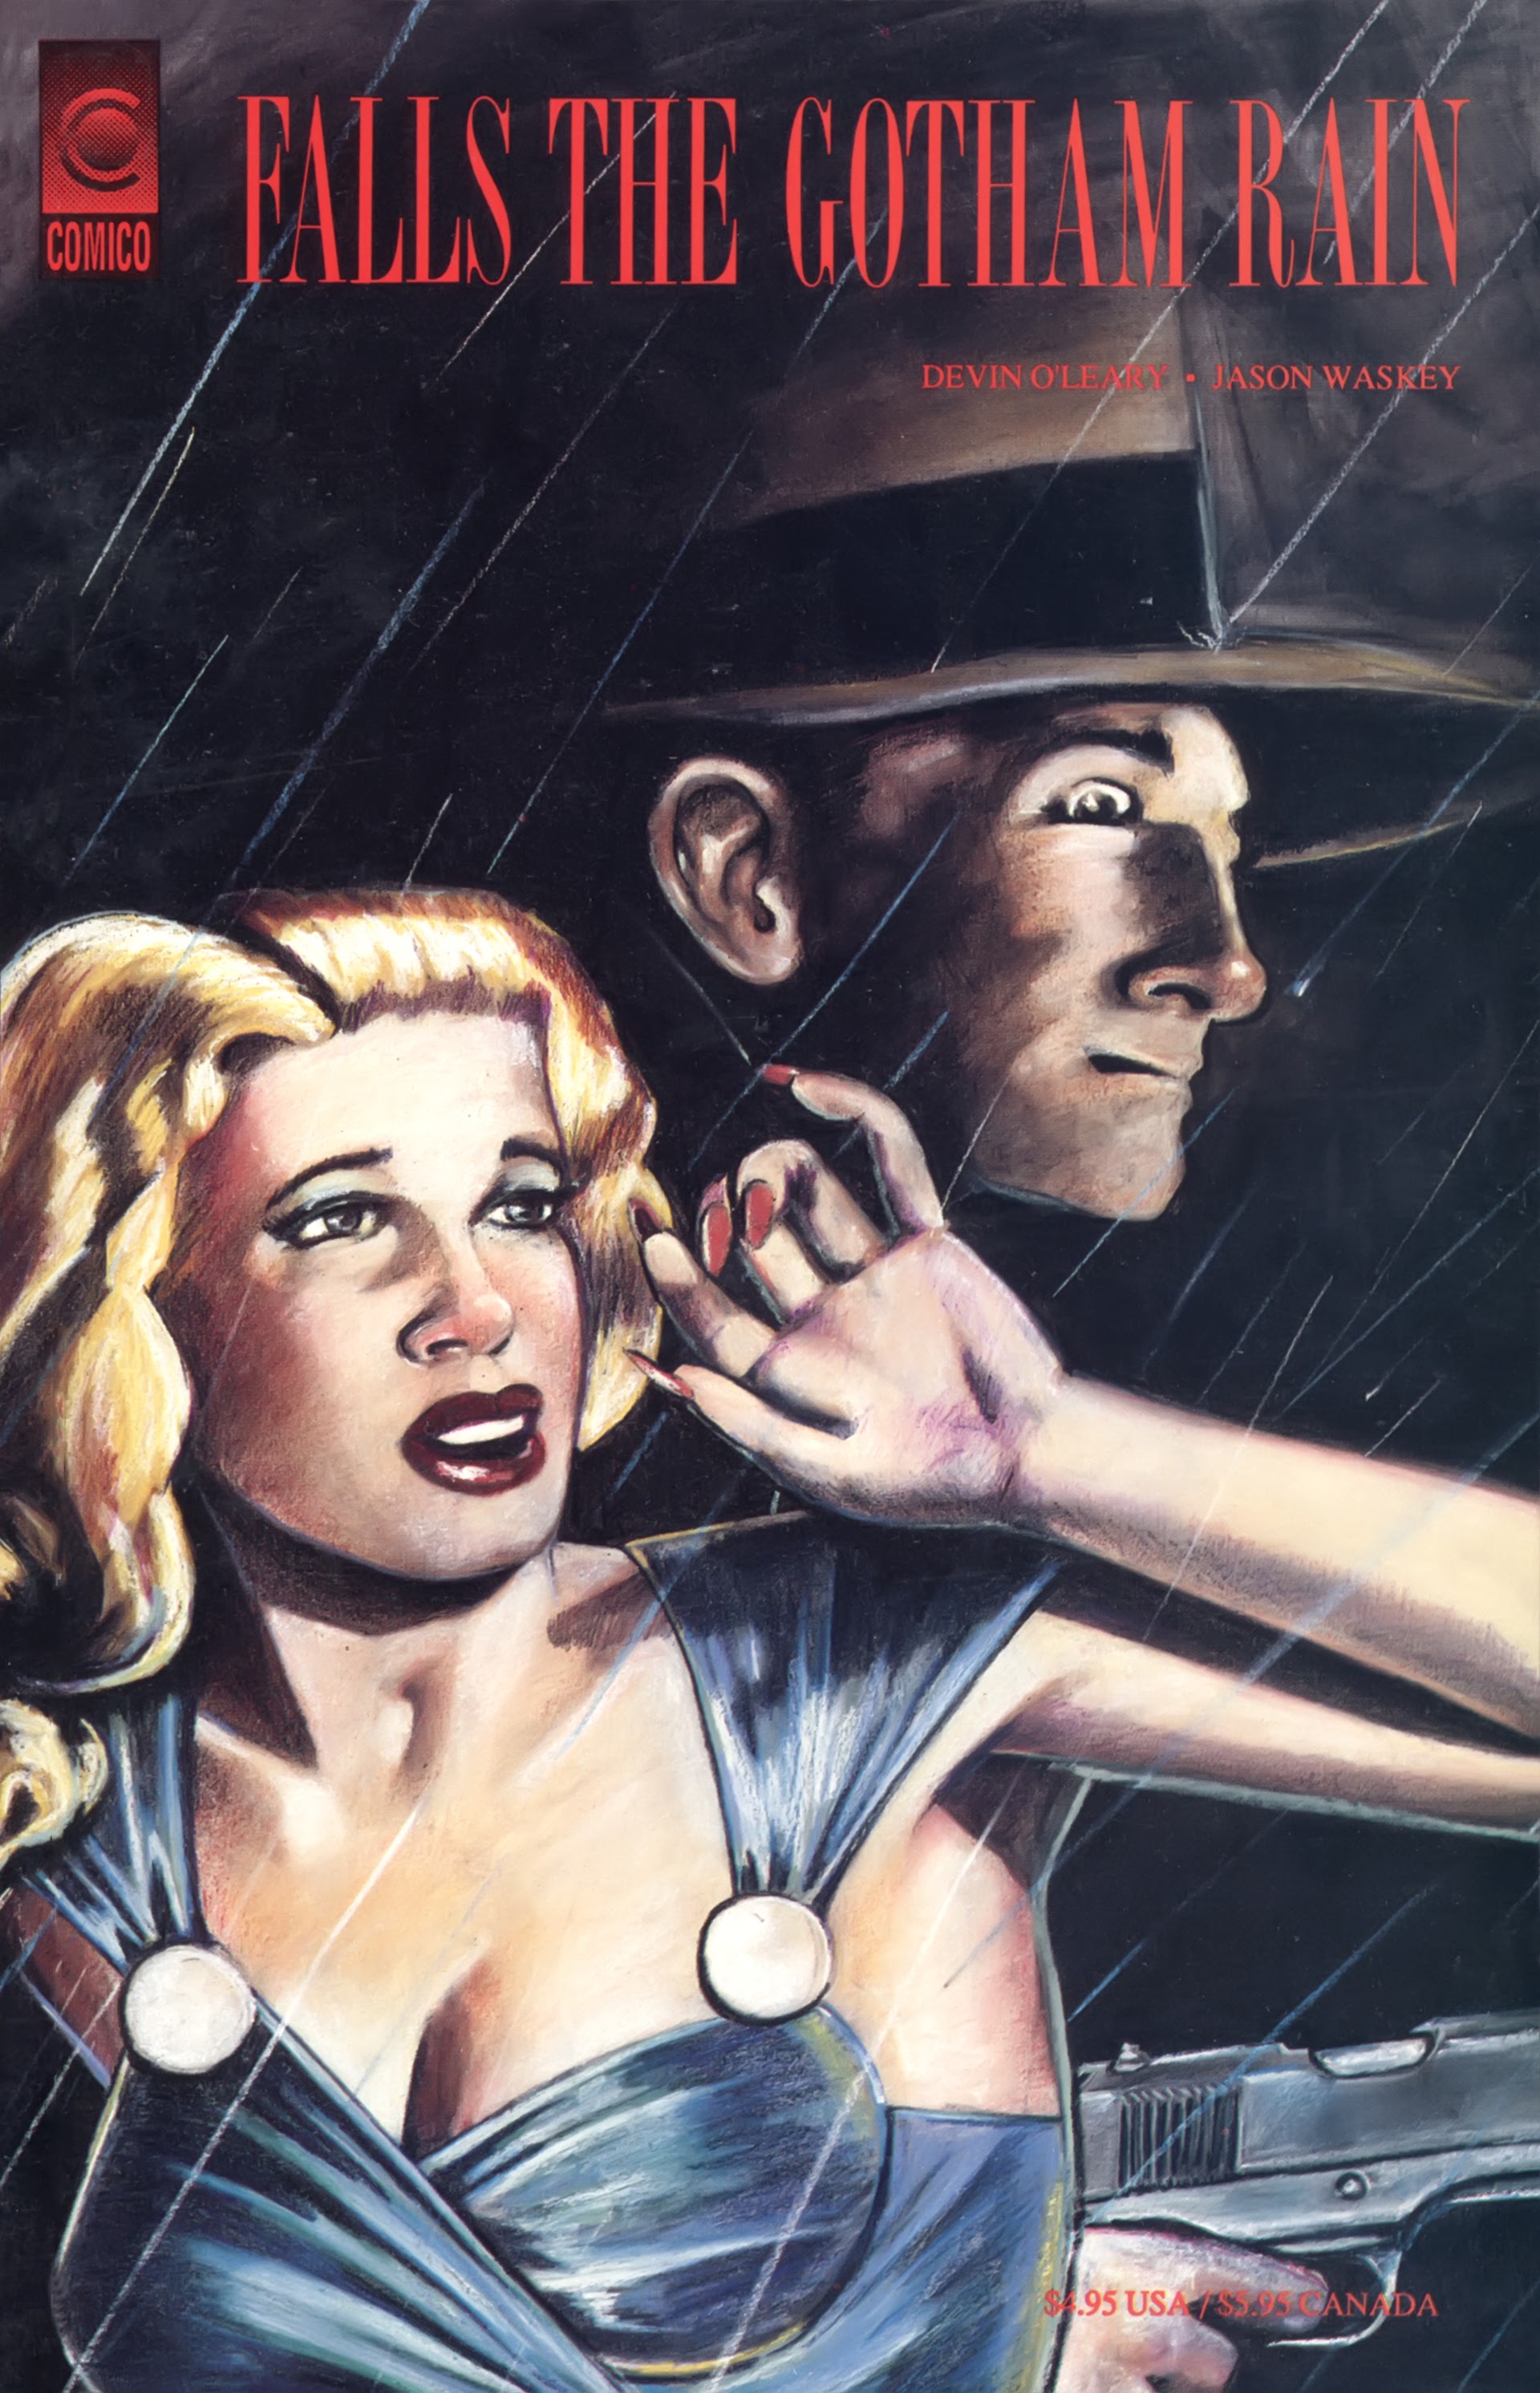 Read online Falls the Gotham Rain comic -  Issue # Full - 1